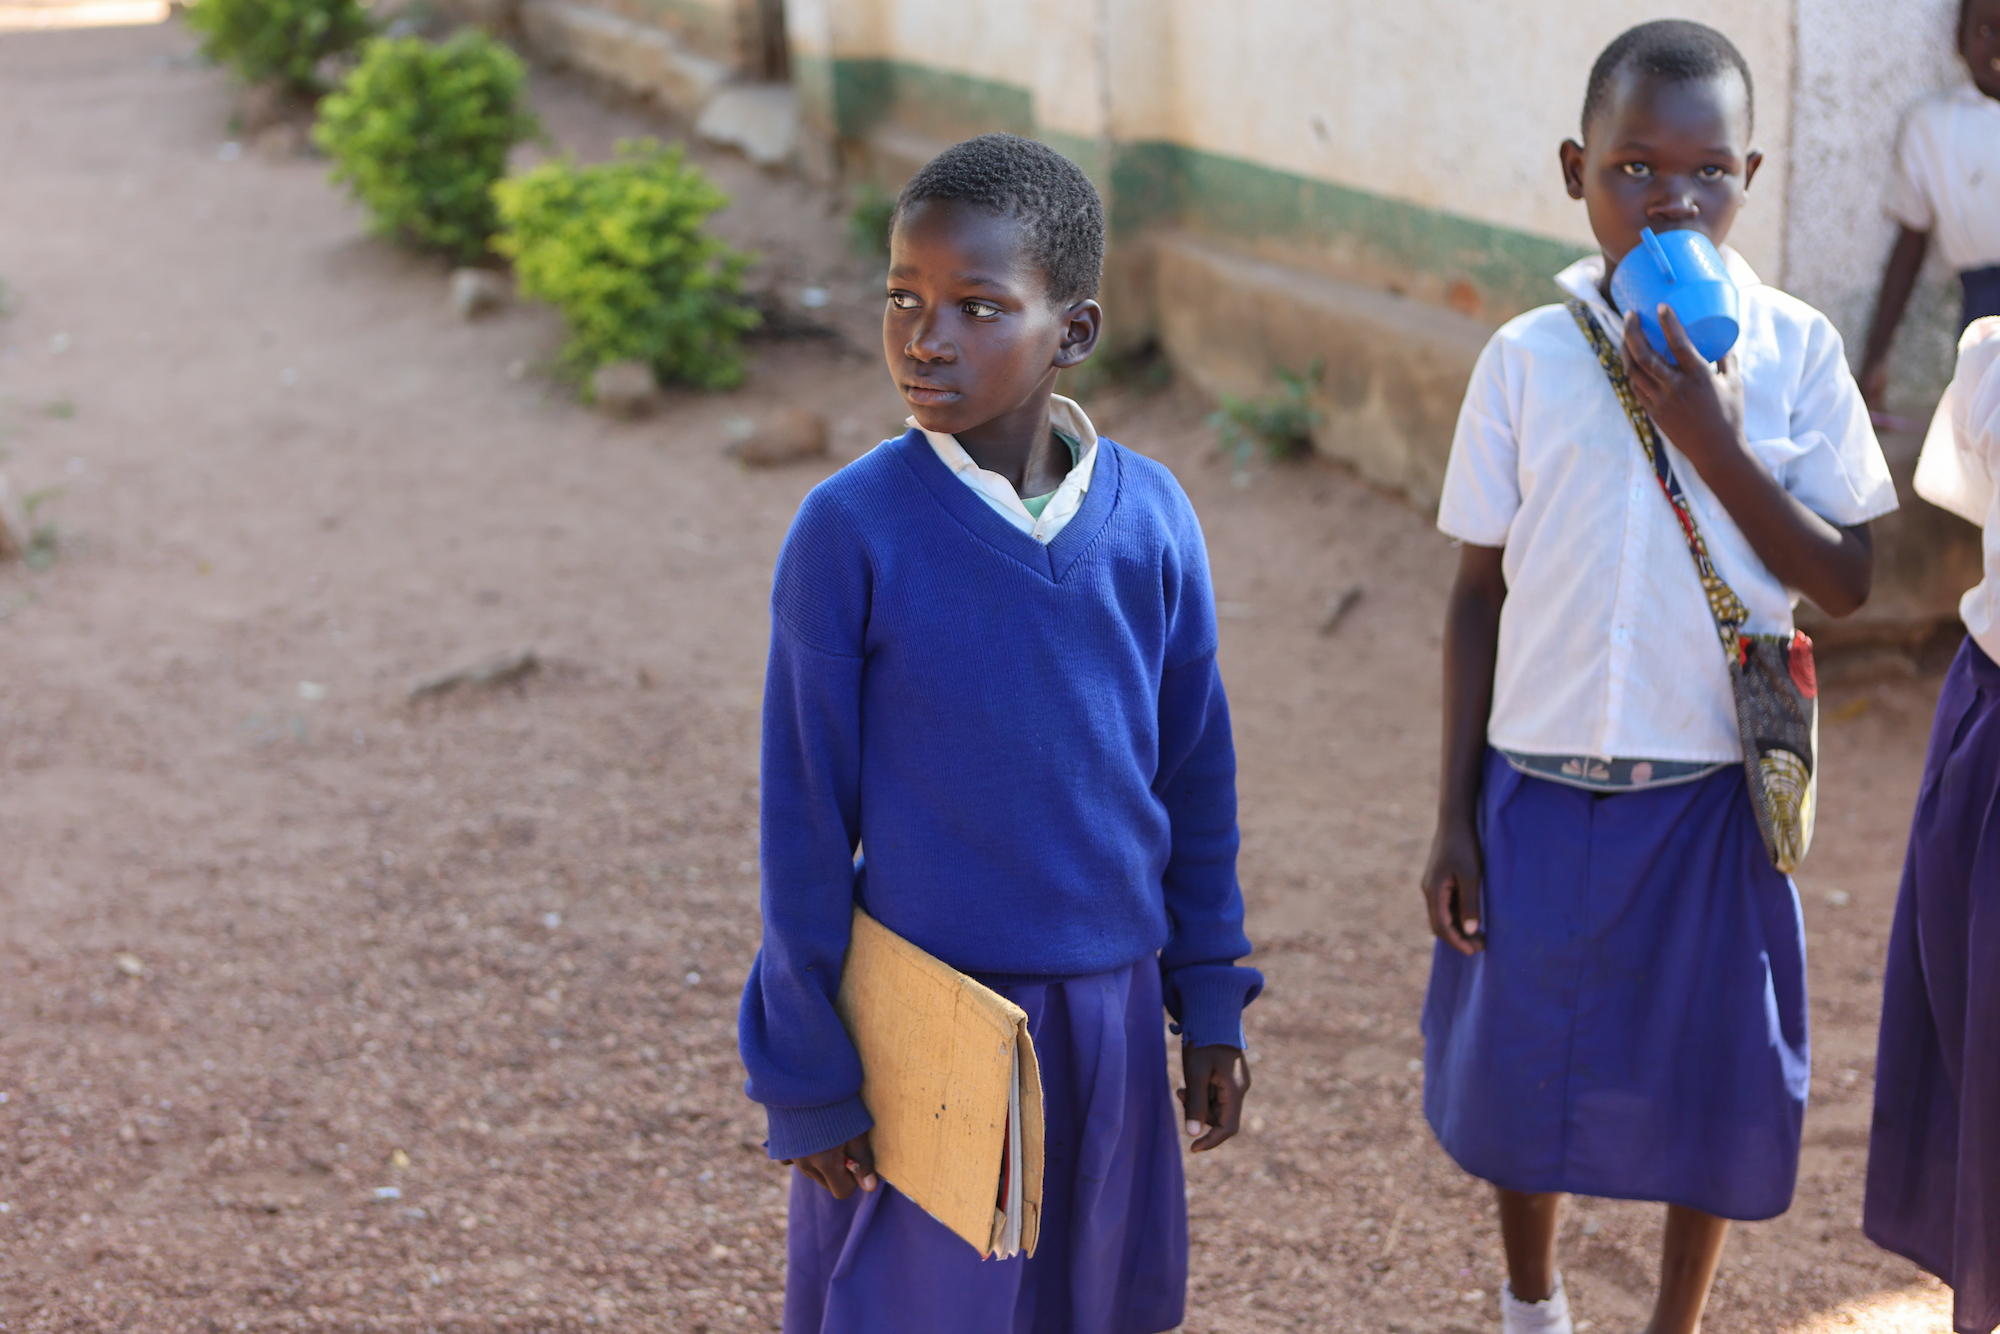 Two Tanzanian school children in blue uniforms